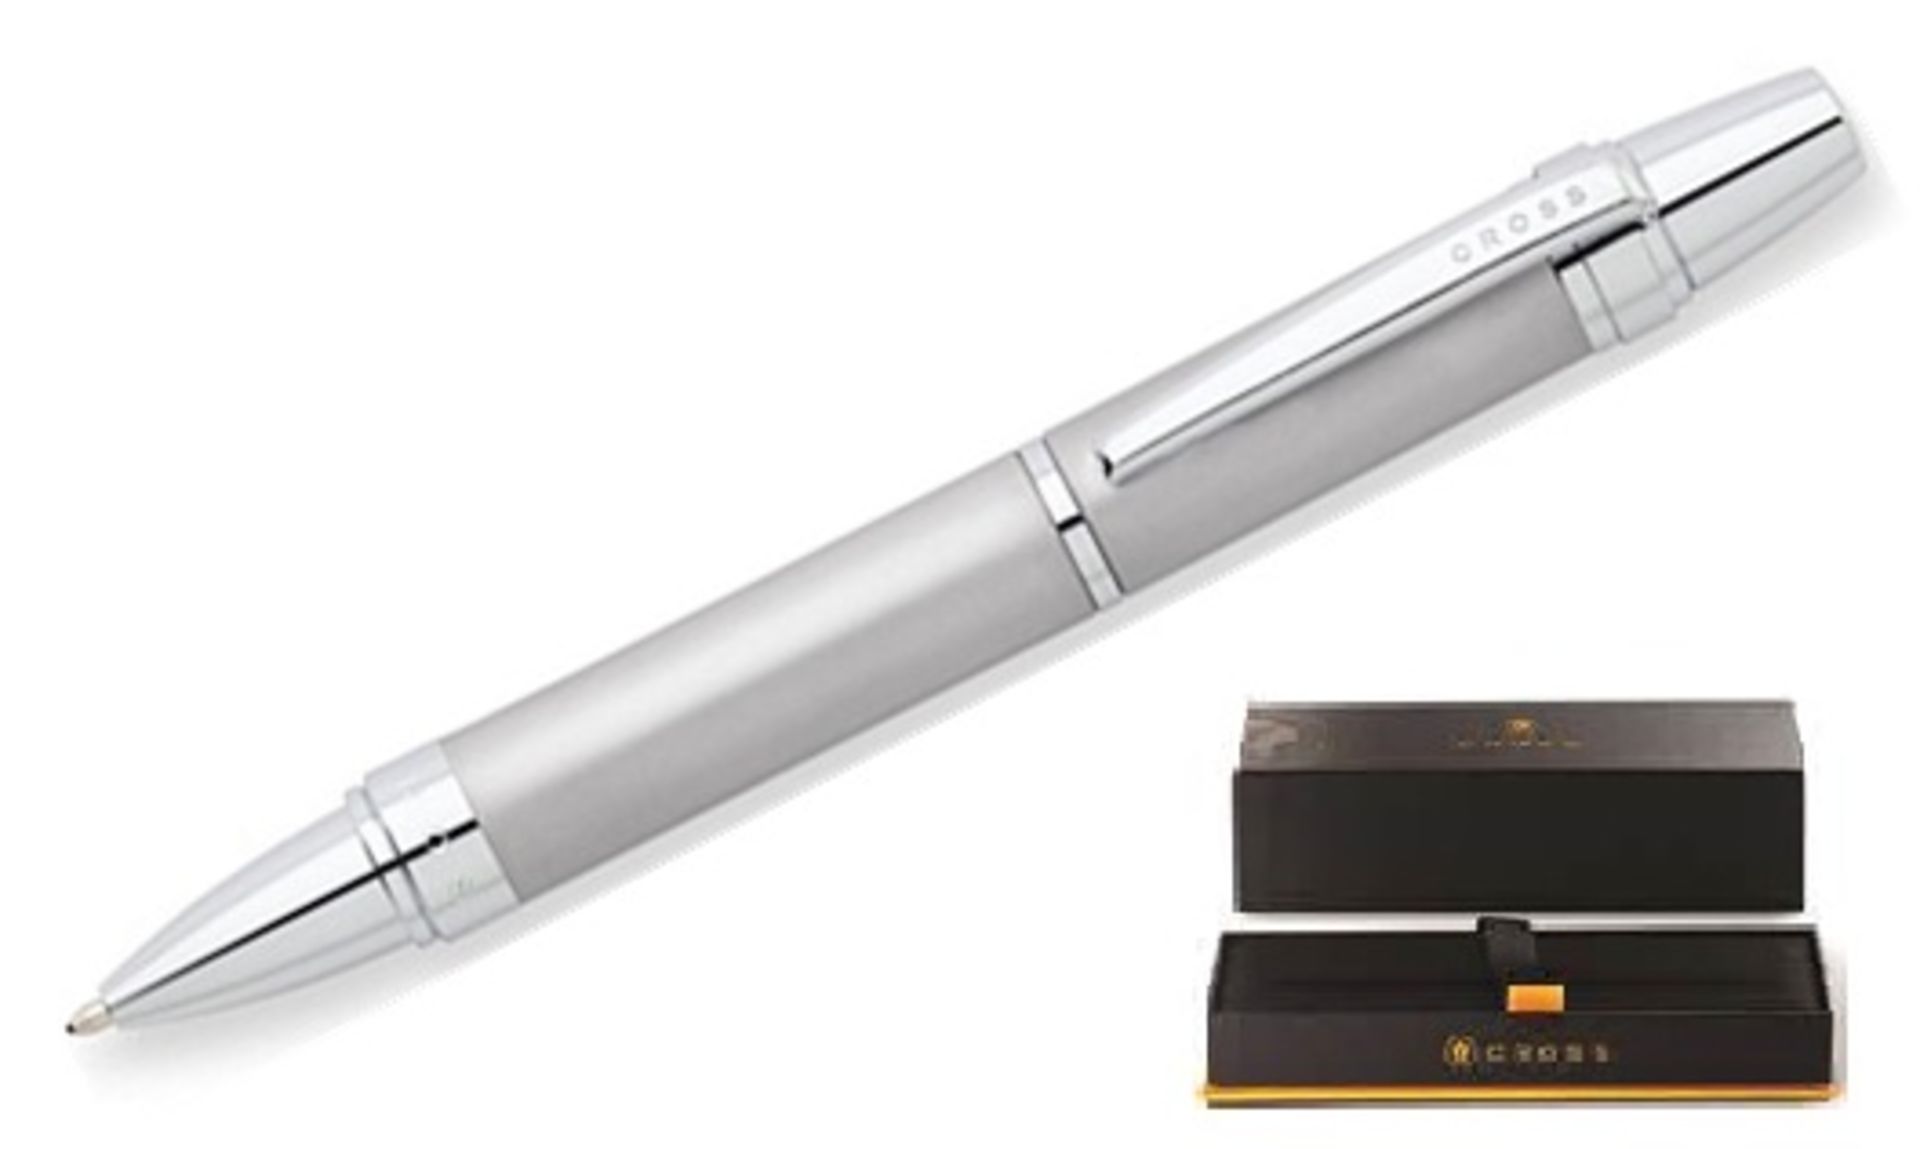 V *TRADE QTY* Brand New Cross Nile Satin Chrome Ballpoint Pen - RRP £25.00 - Amazon Price £17.68 X 8